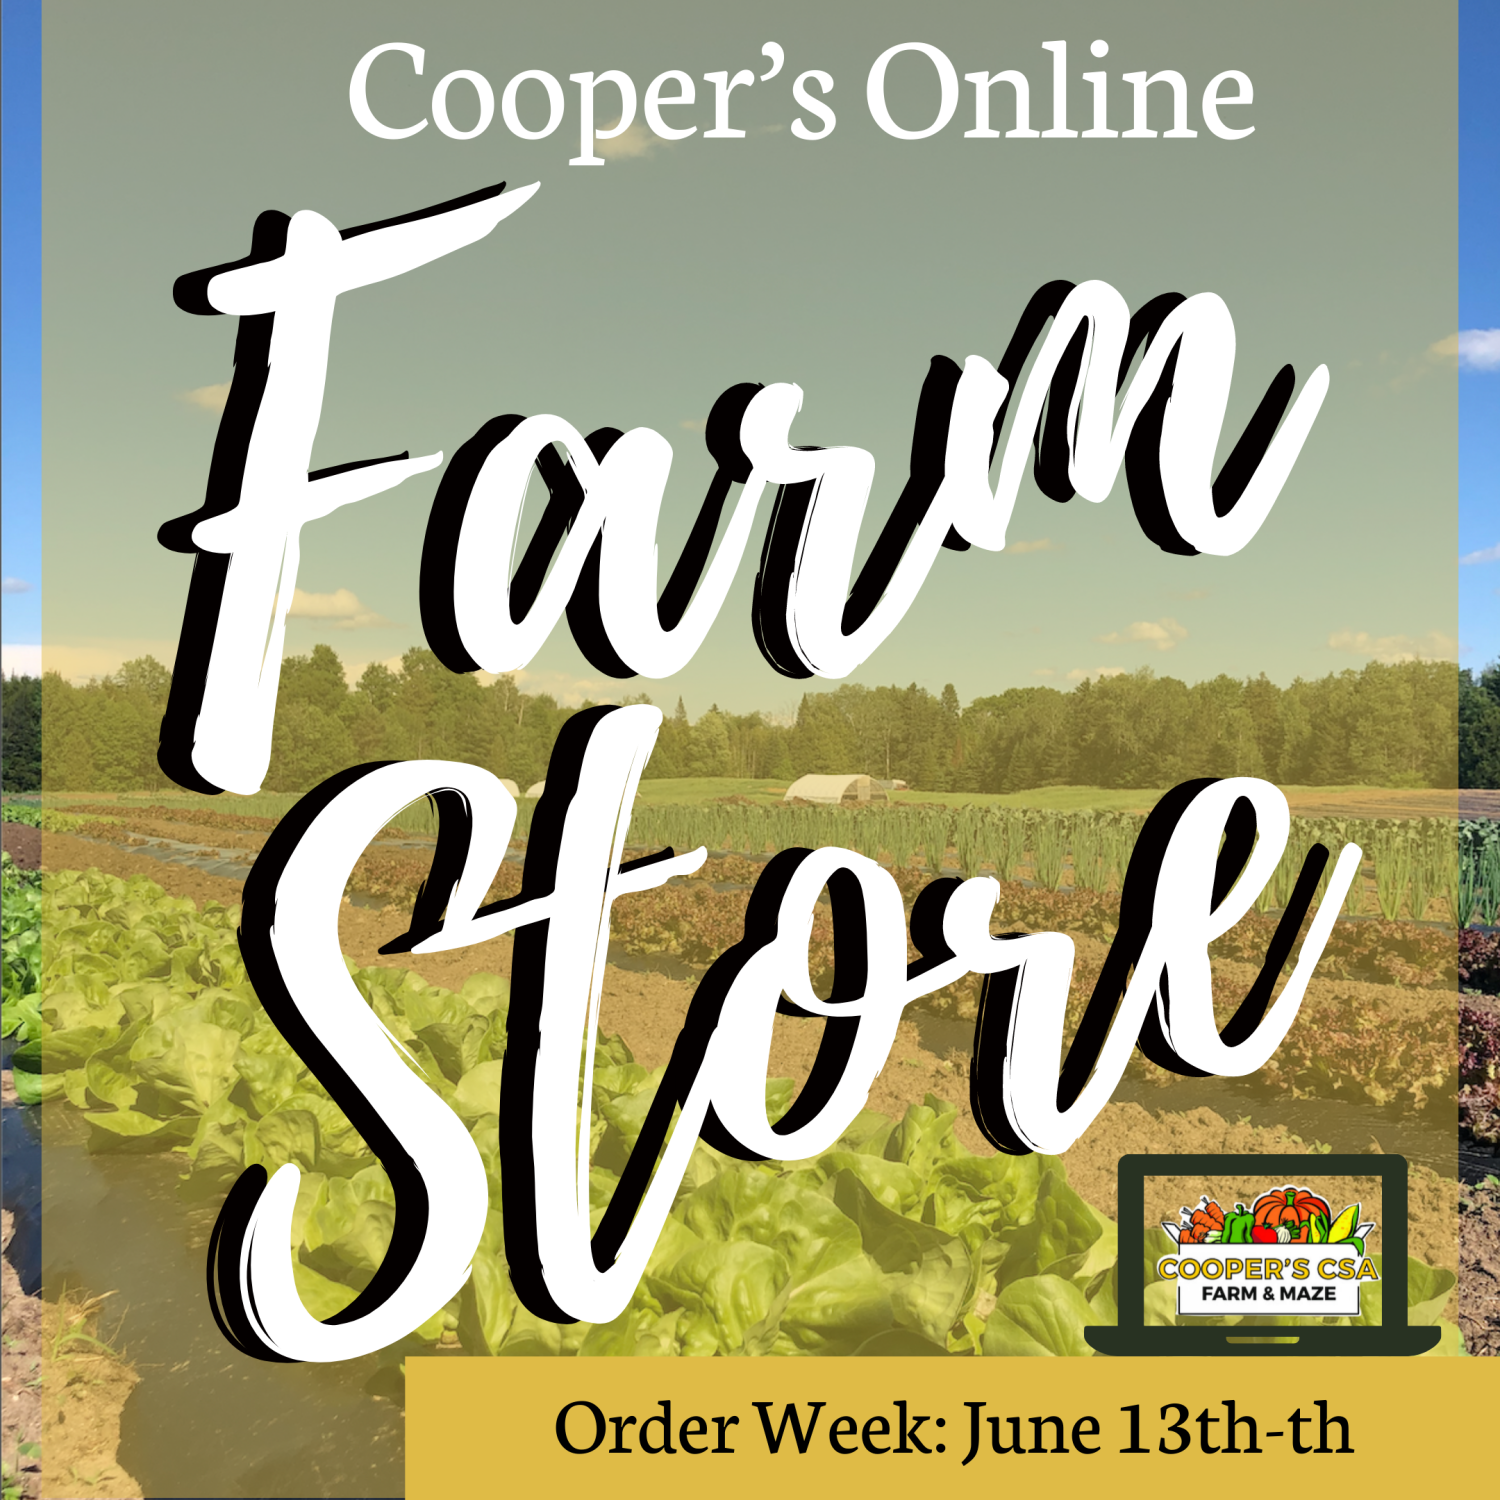 Next Happening: Coopers CSA Online FarmStore- Order week June 13th-15th